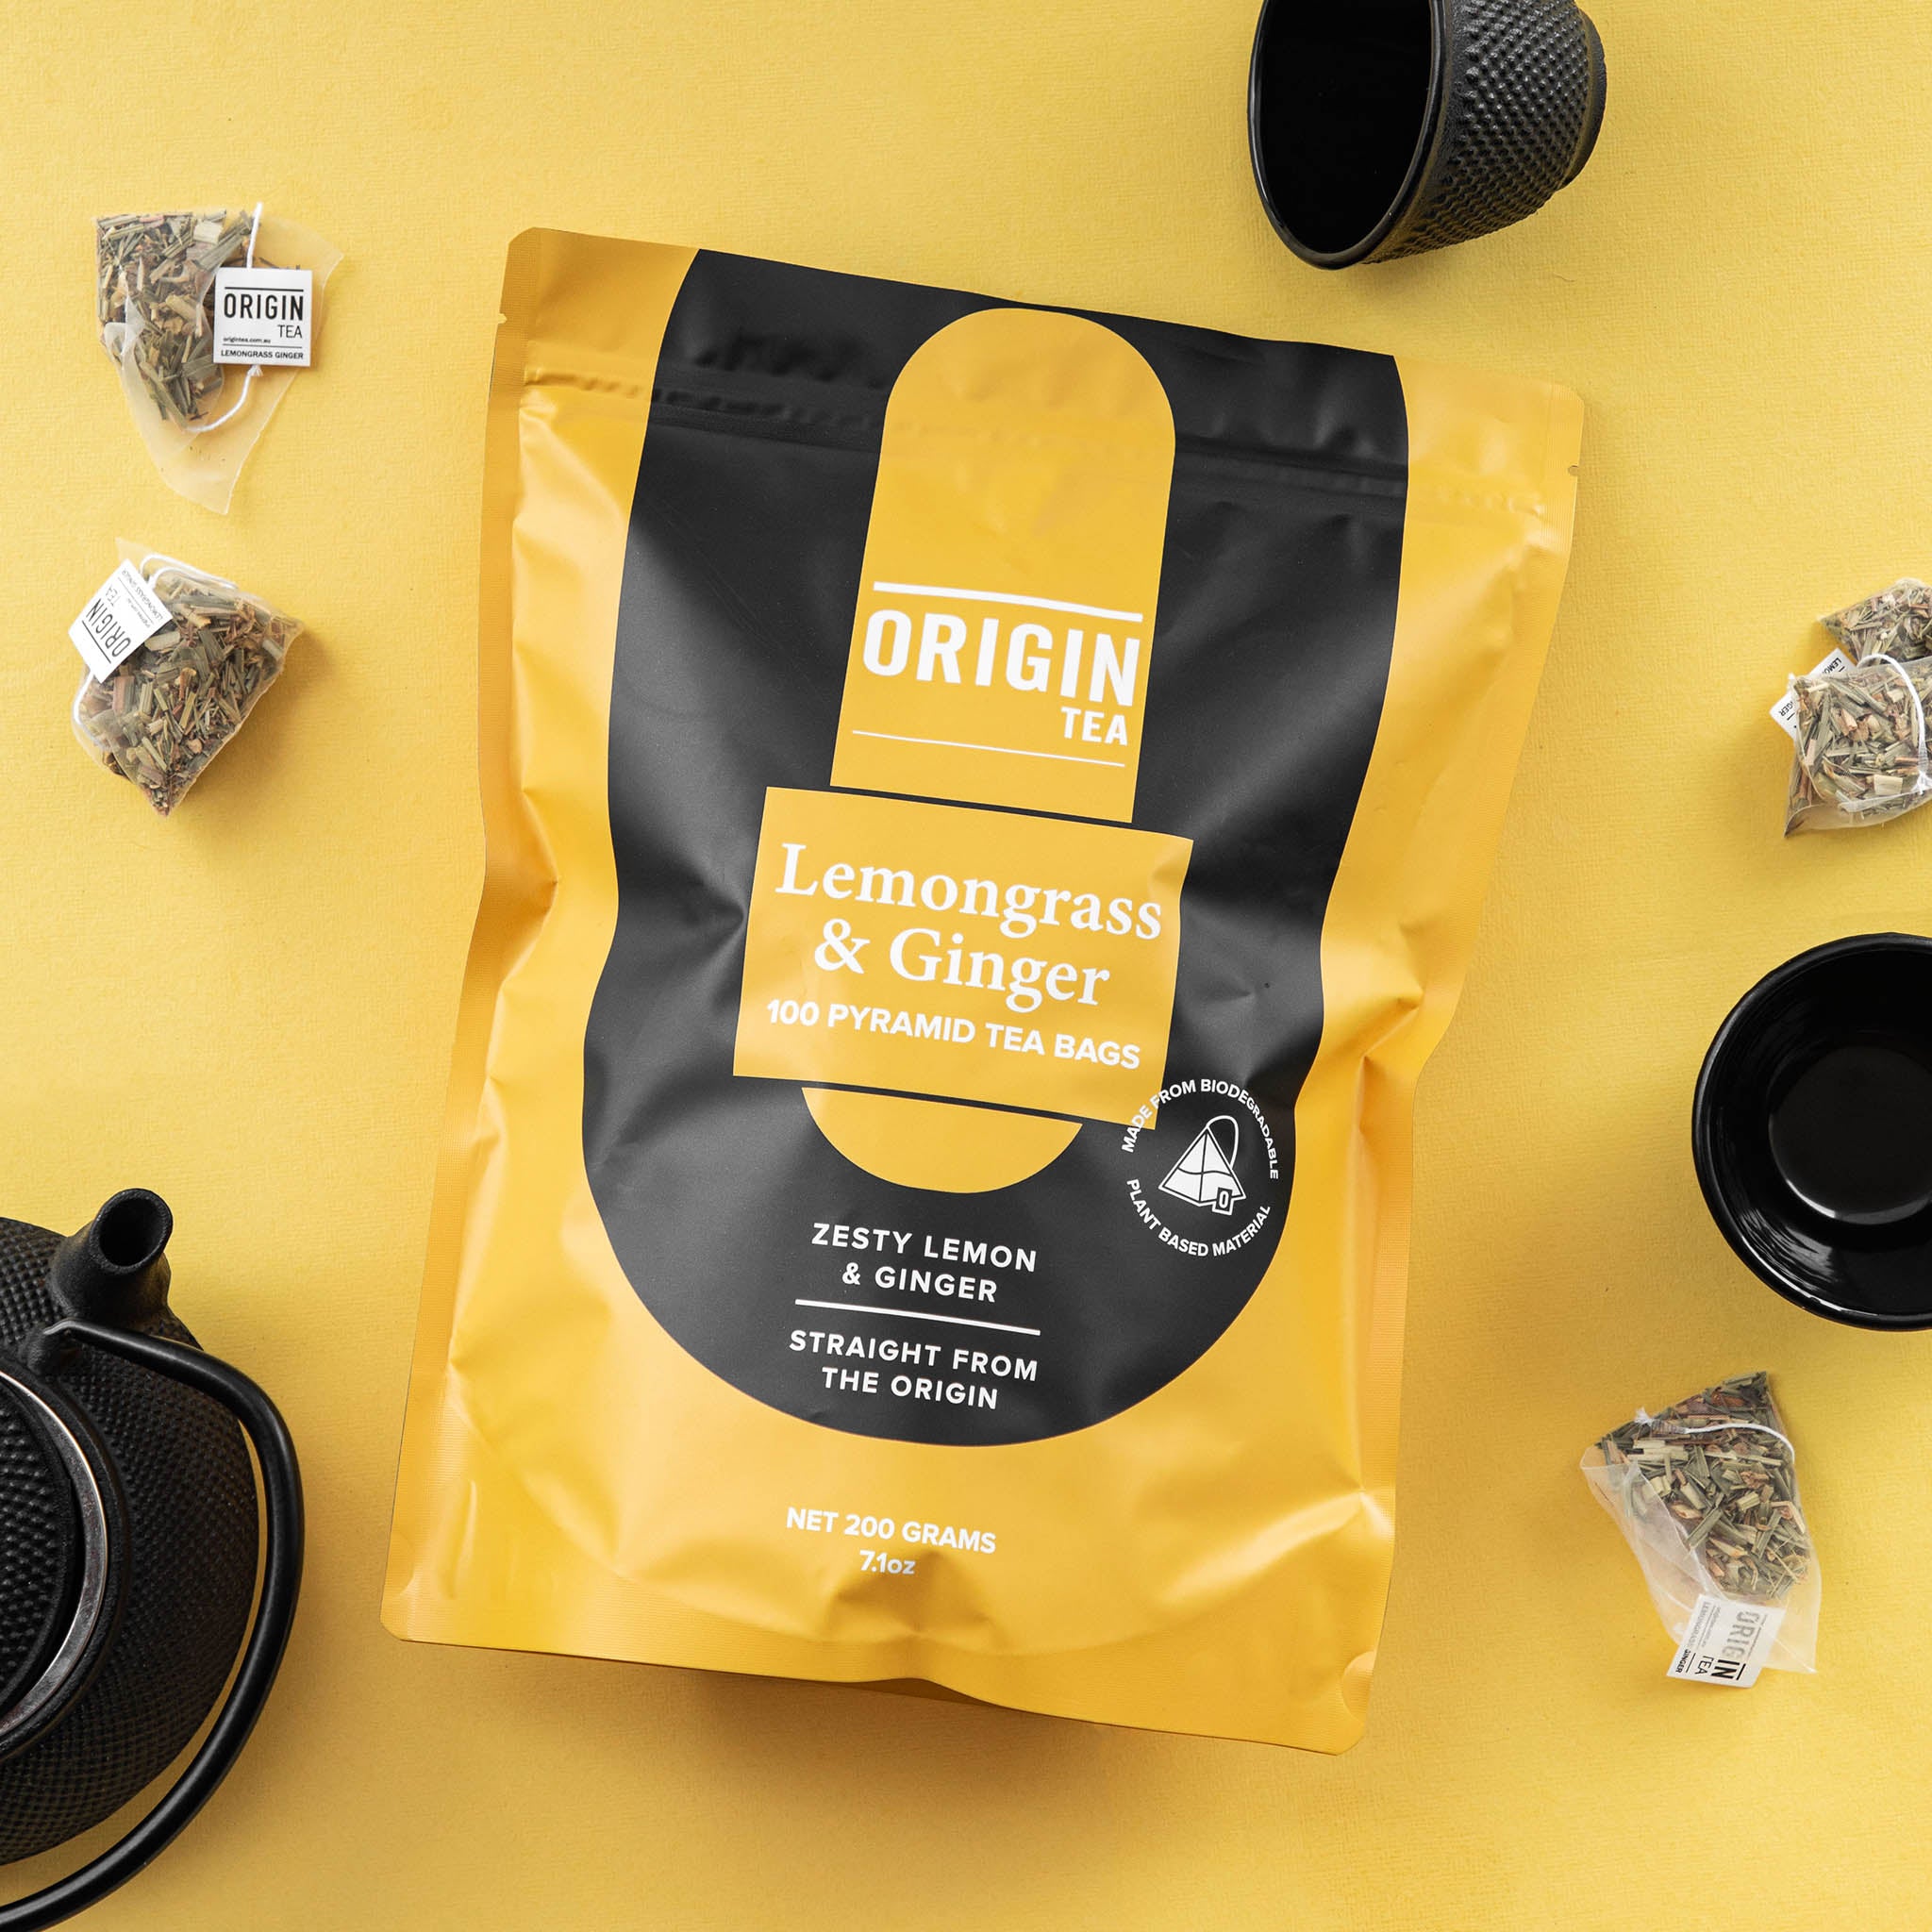 Lemongrass Ginger Caffeine Free Pyramid Herbal Tea Bags - 100 Bags - Origin Tea